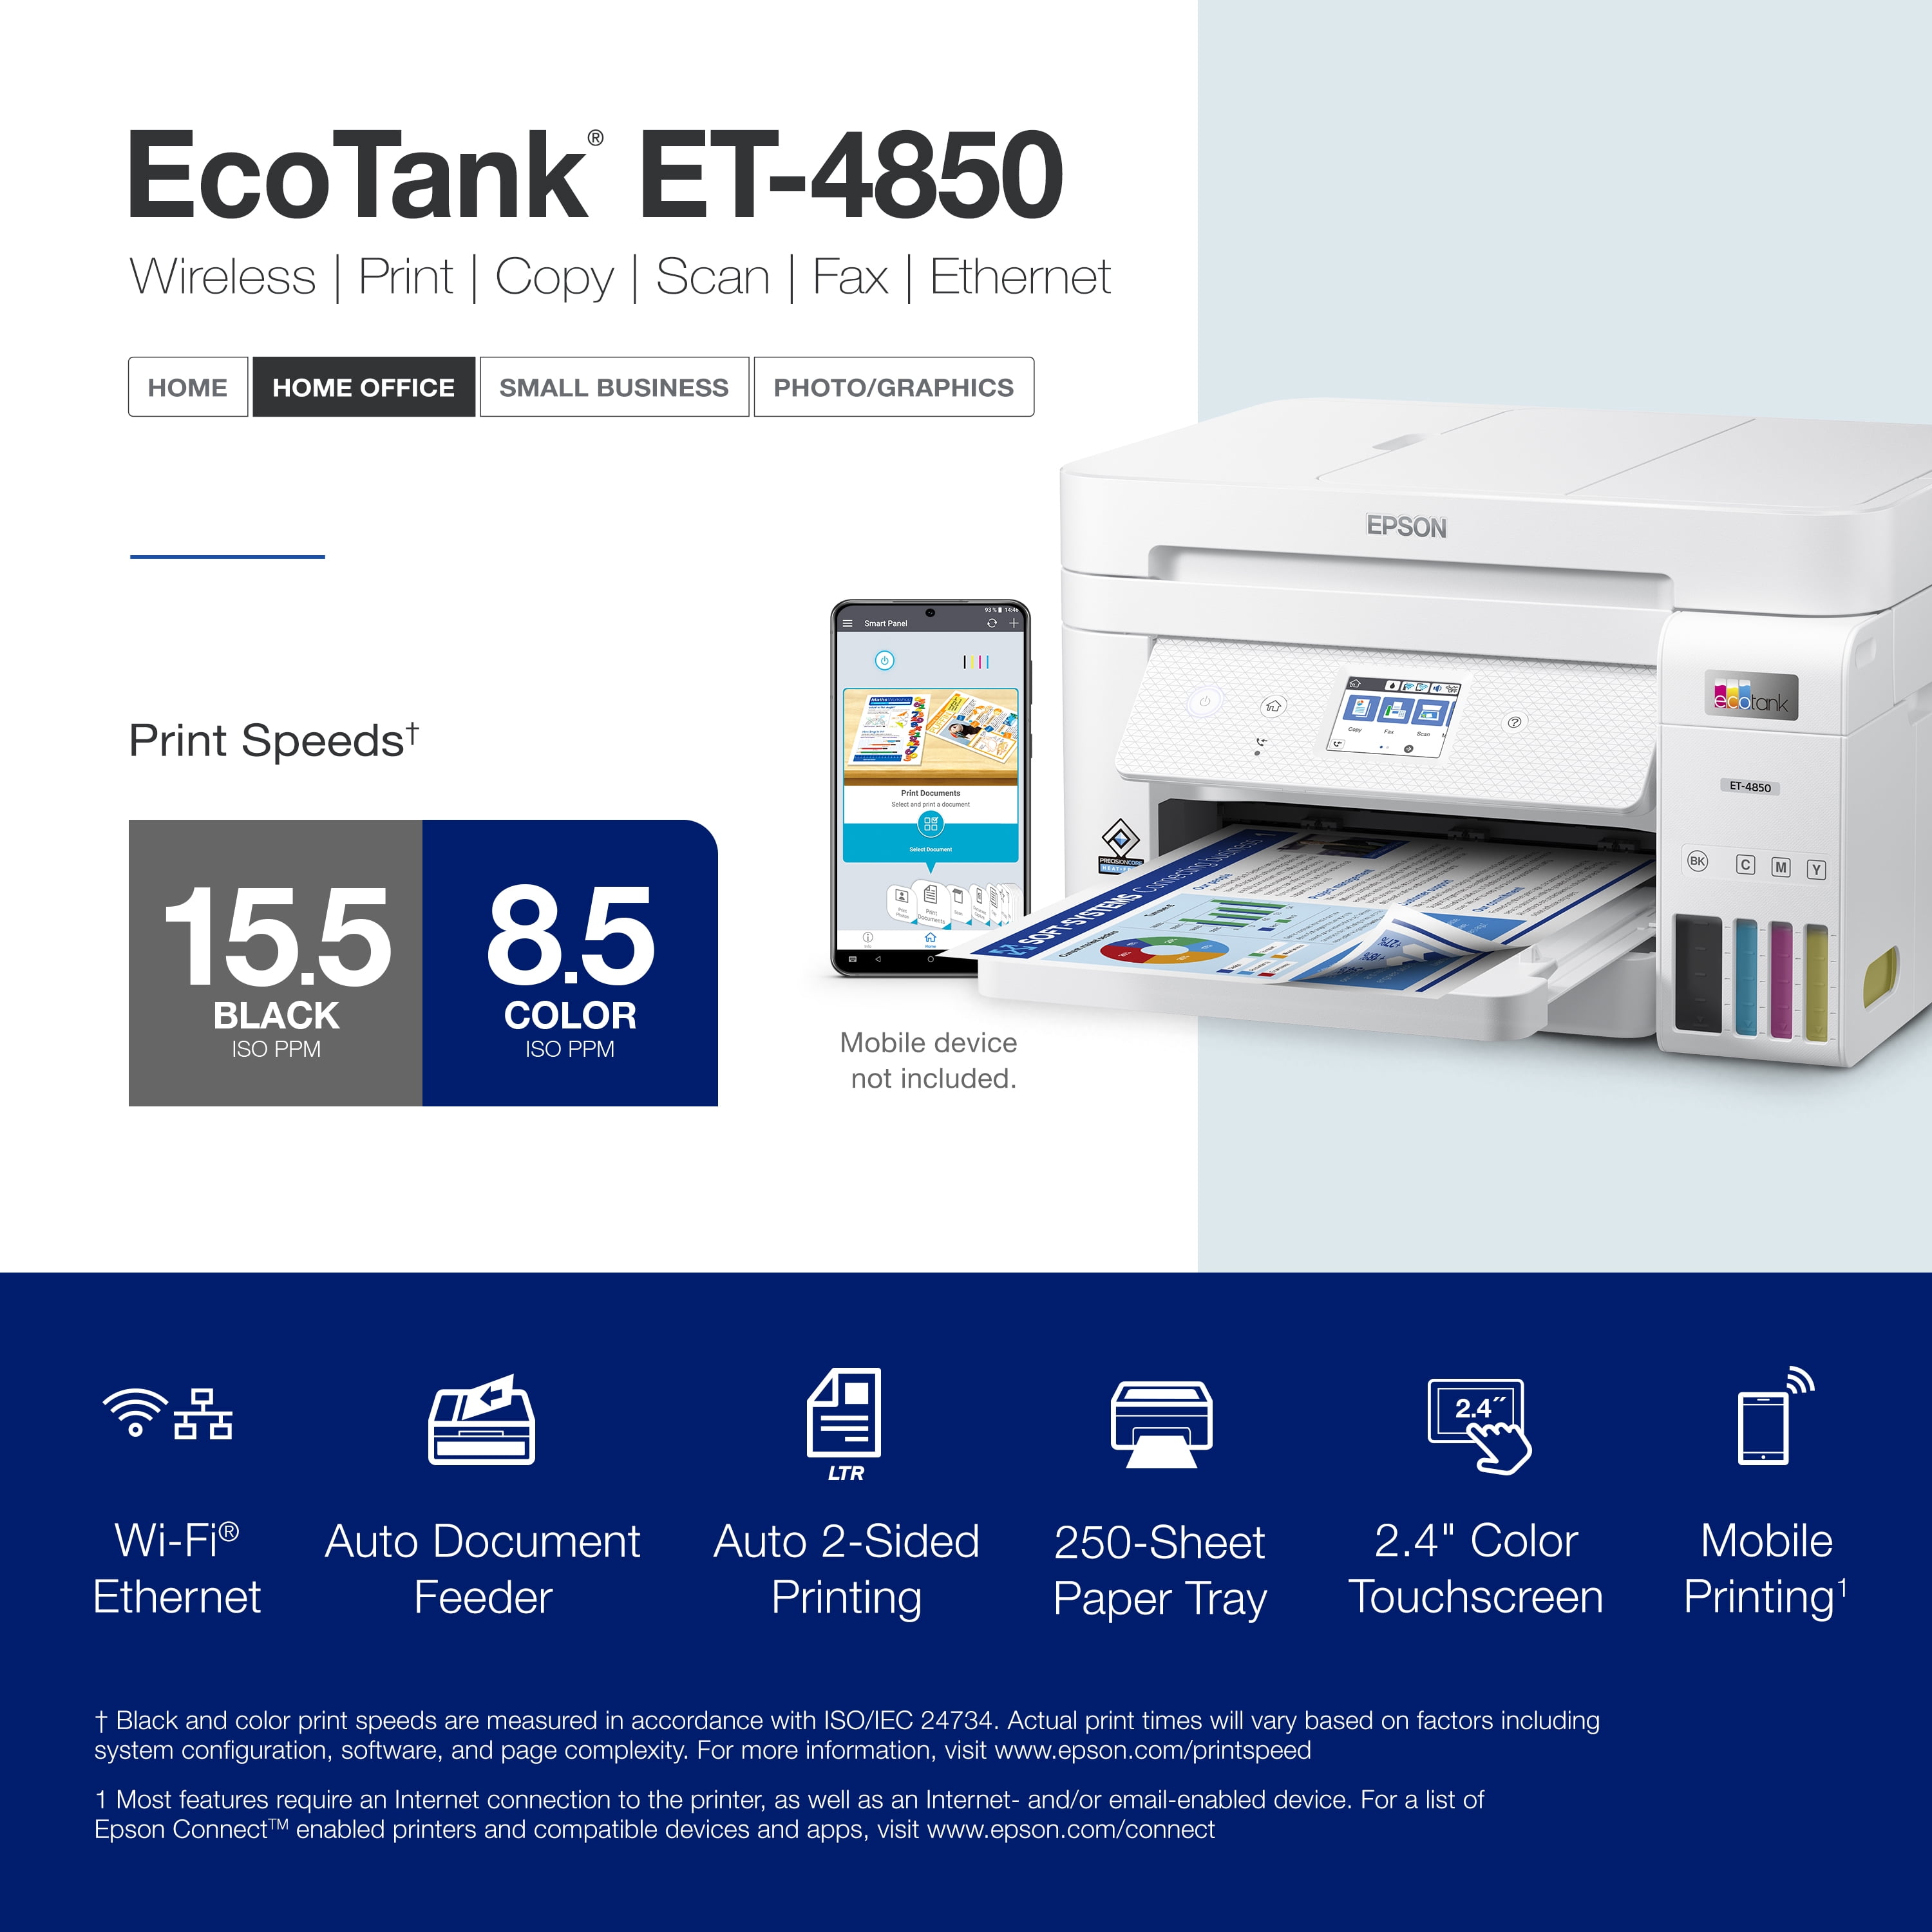 STAMPANTE EPSON MFC INK EcoTank ET-4850 C11CJ60402 A4 33PPM 4in1